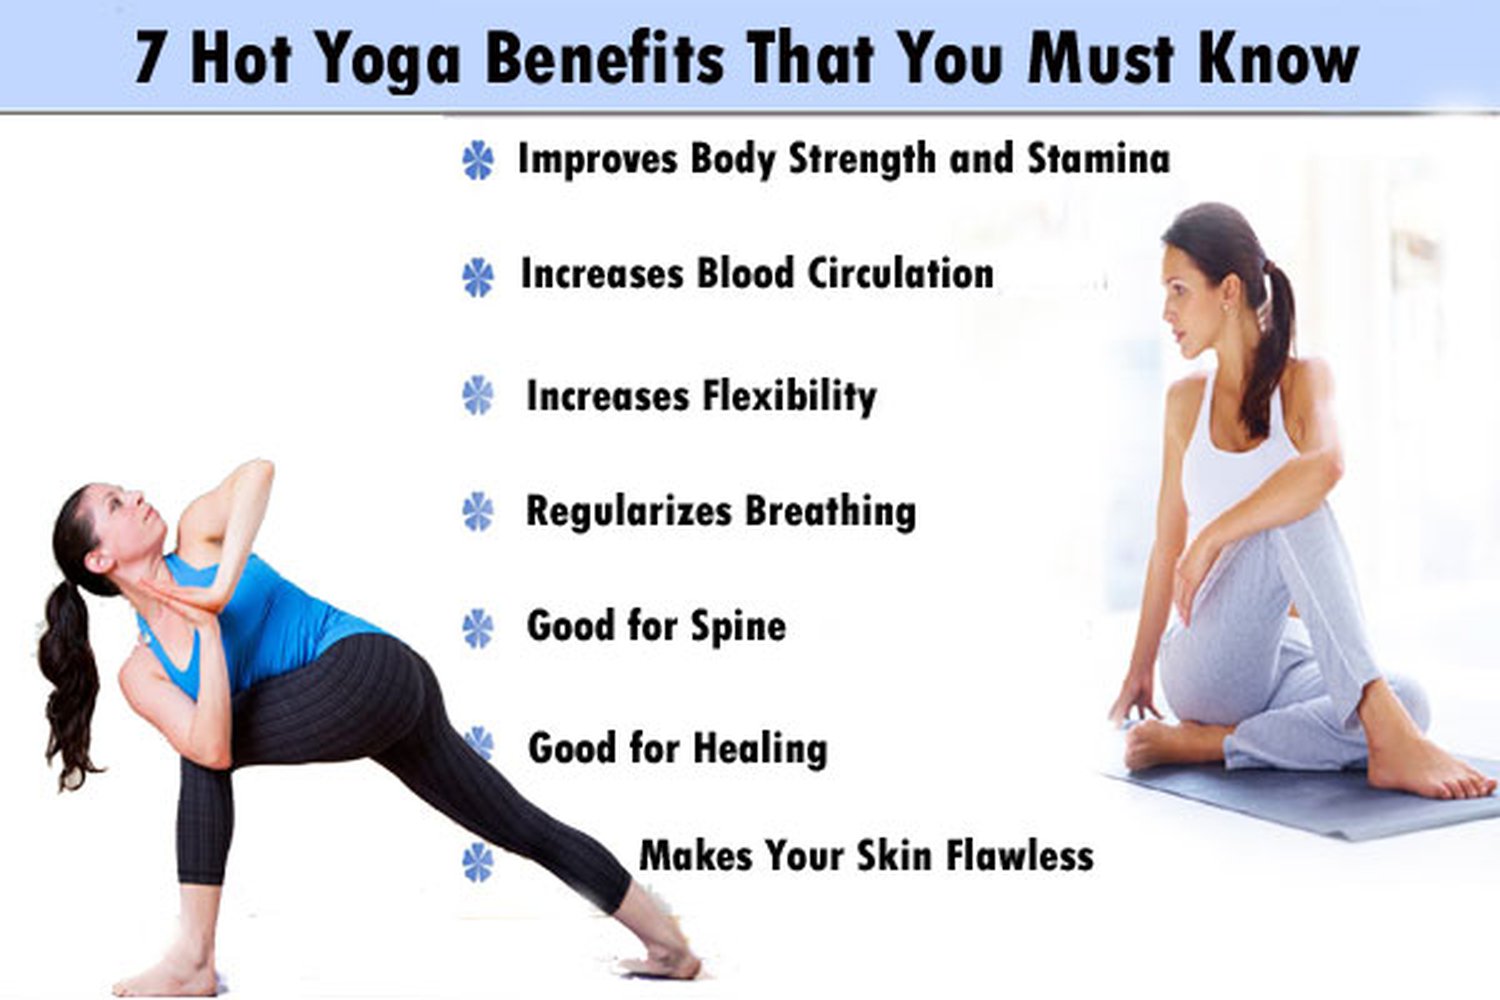 Benefits Of Hot Yoga